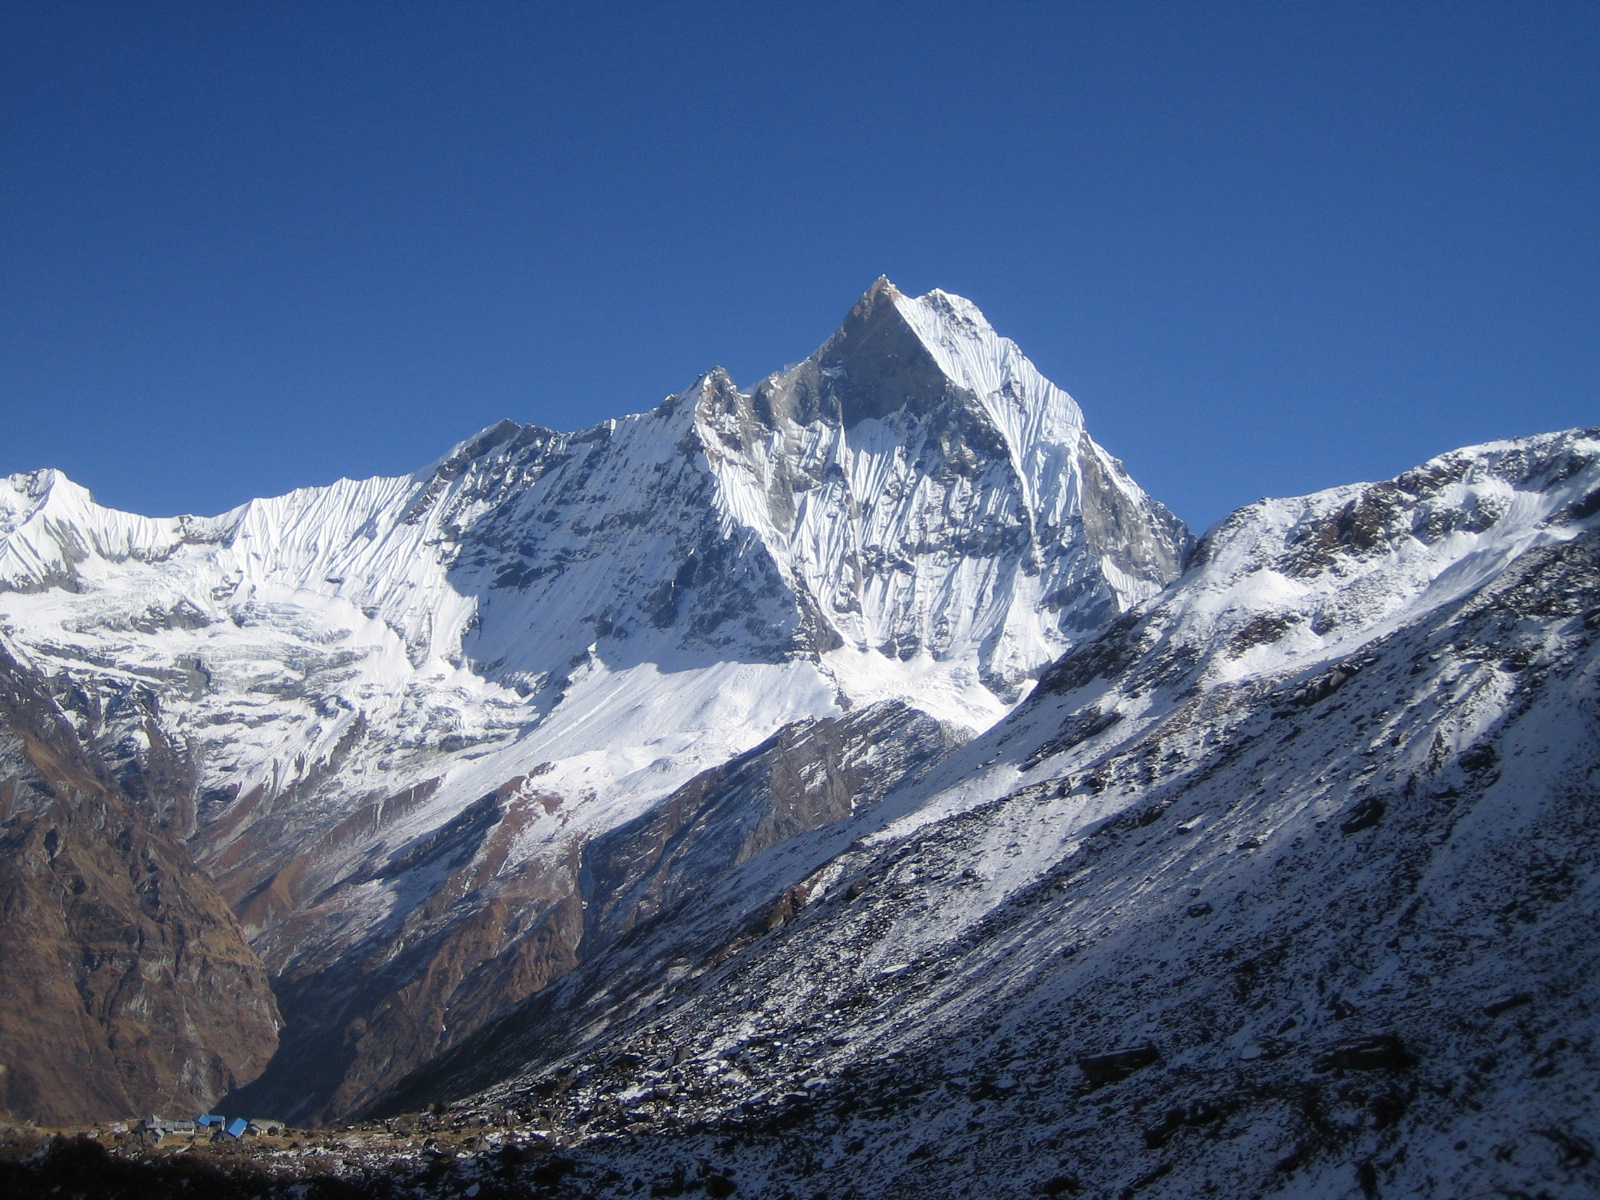 Mt.Annapurna I Expedition (8,091m)